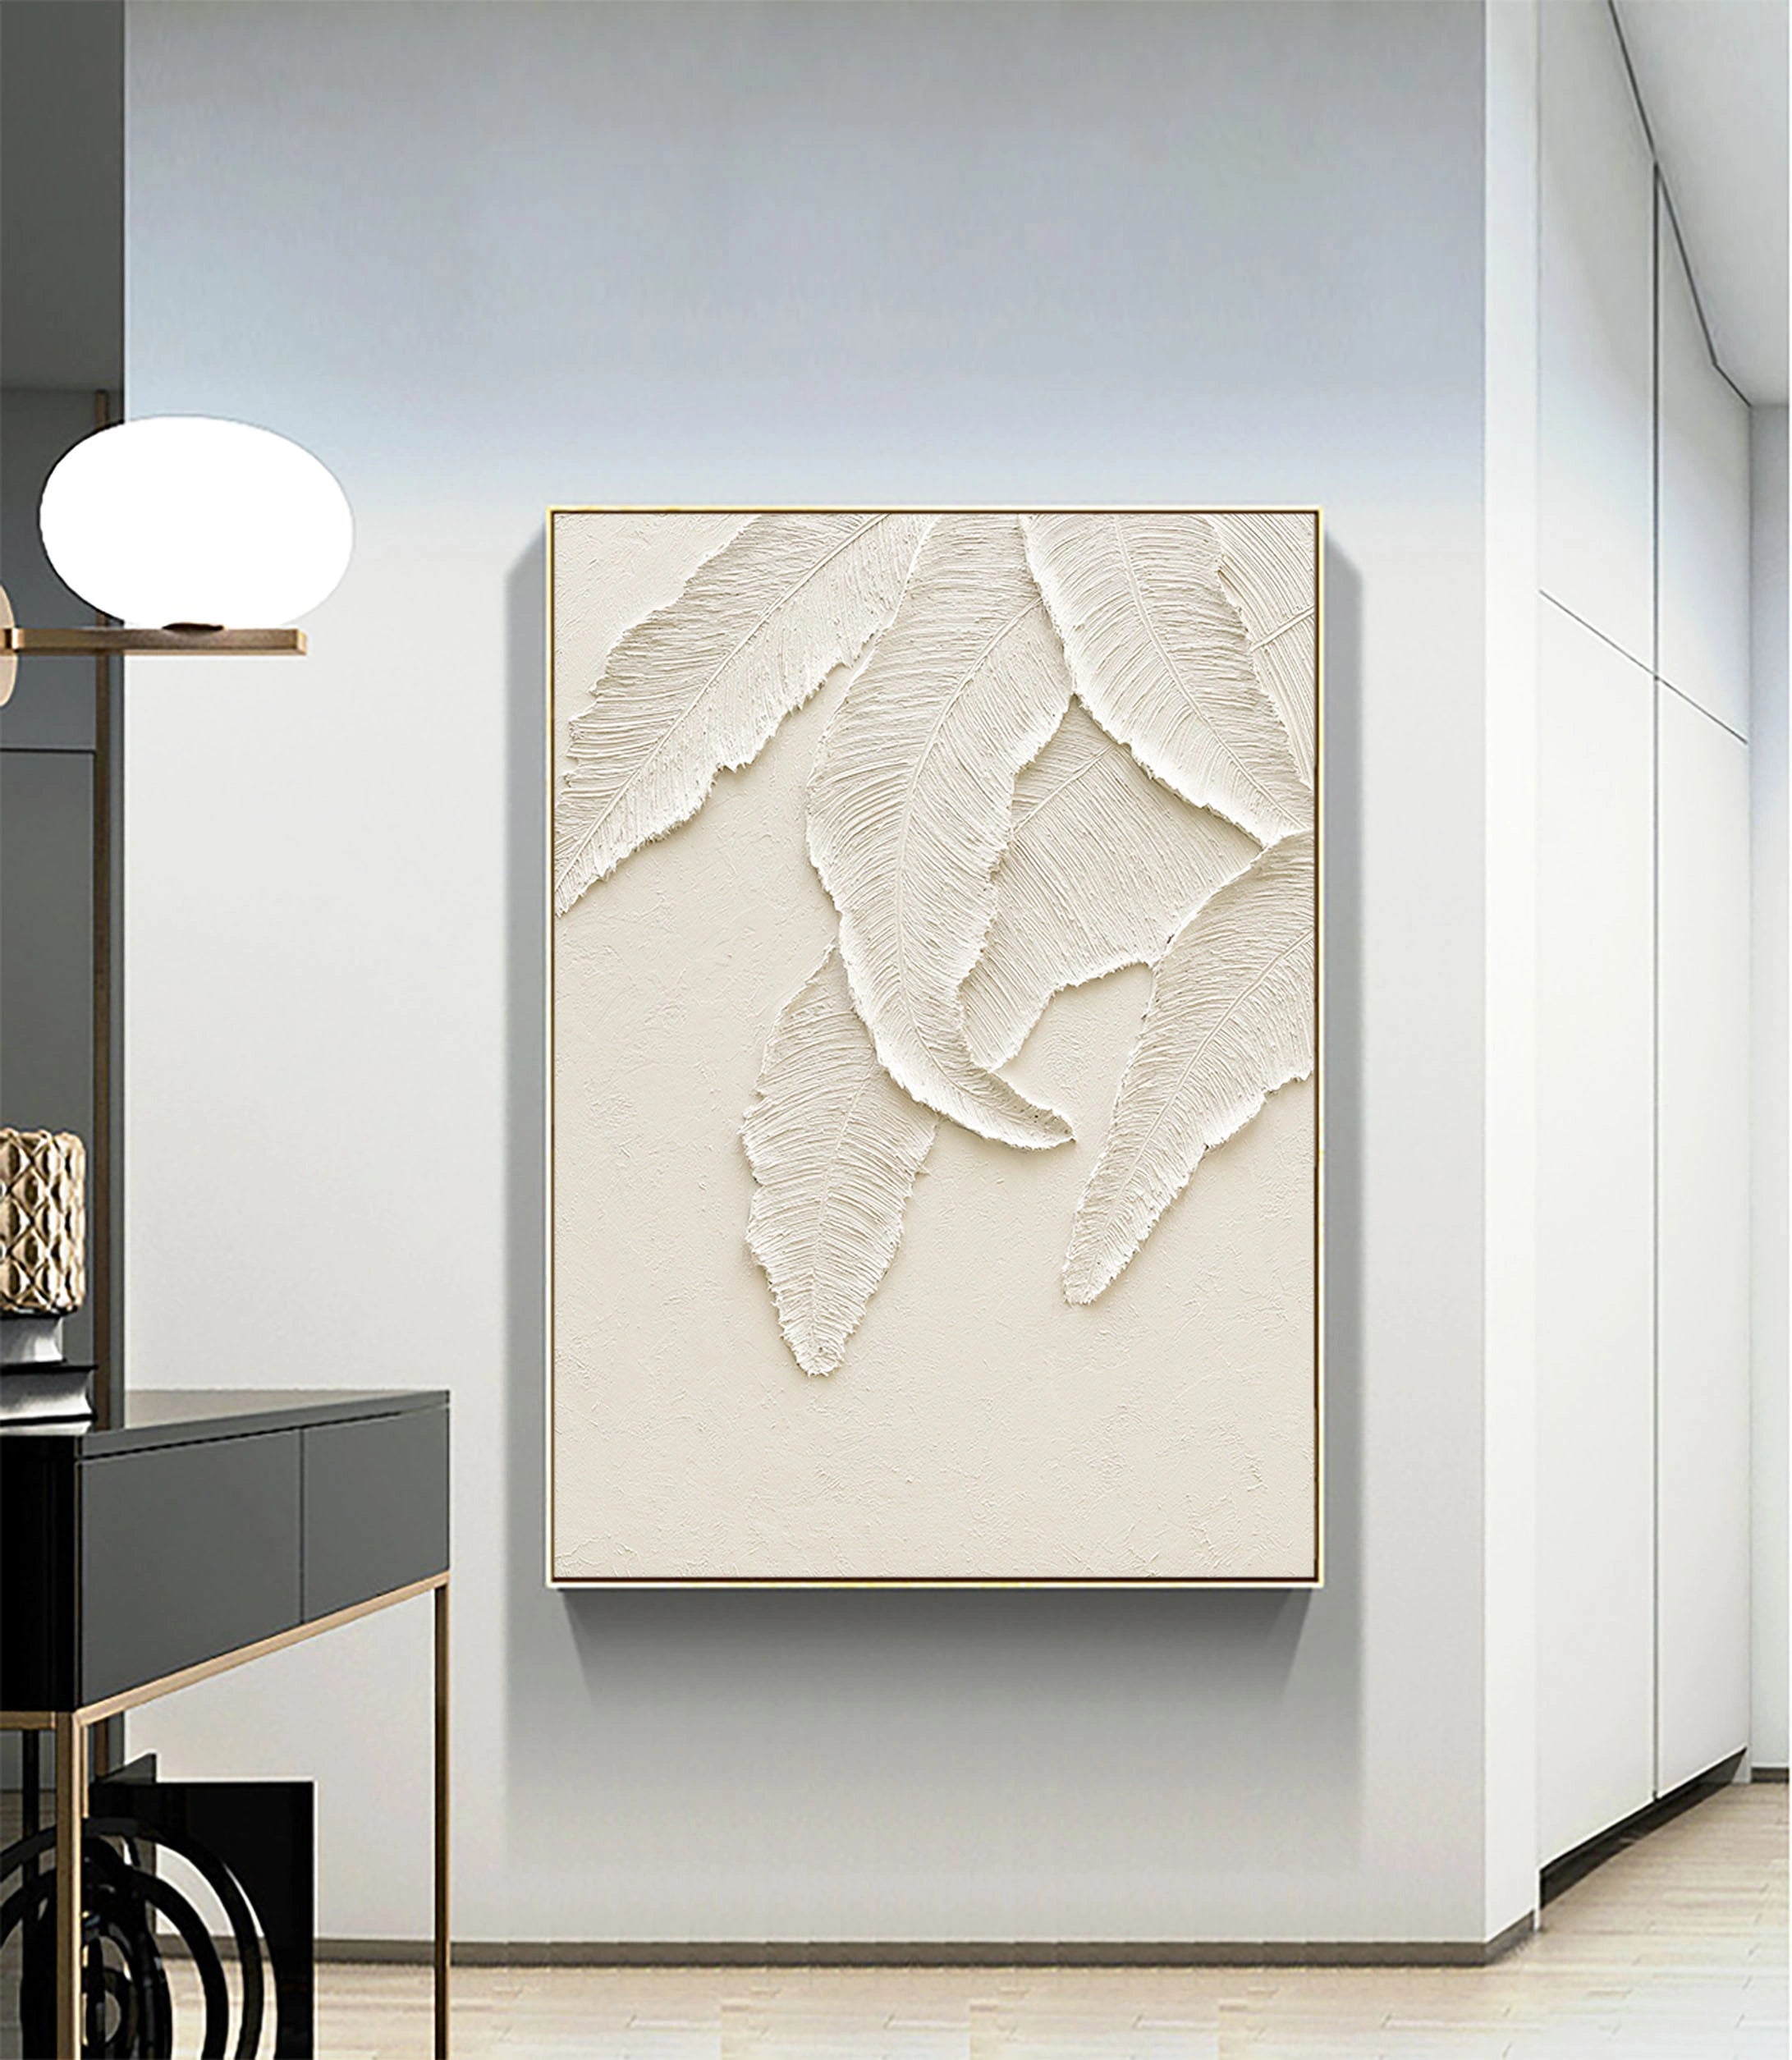 3D Textured Leaves Minimalistic Plaster Art Painting for Bedroom/Living Room